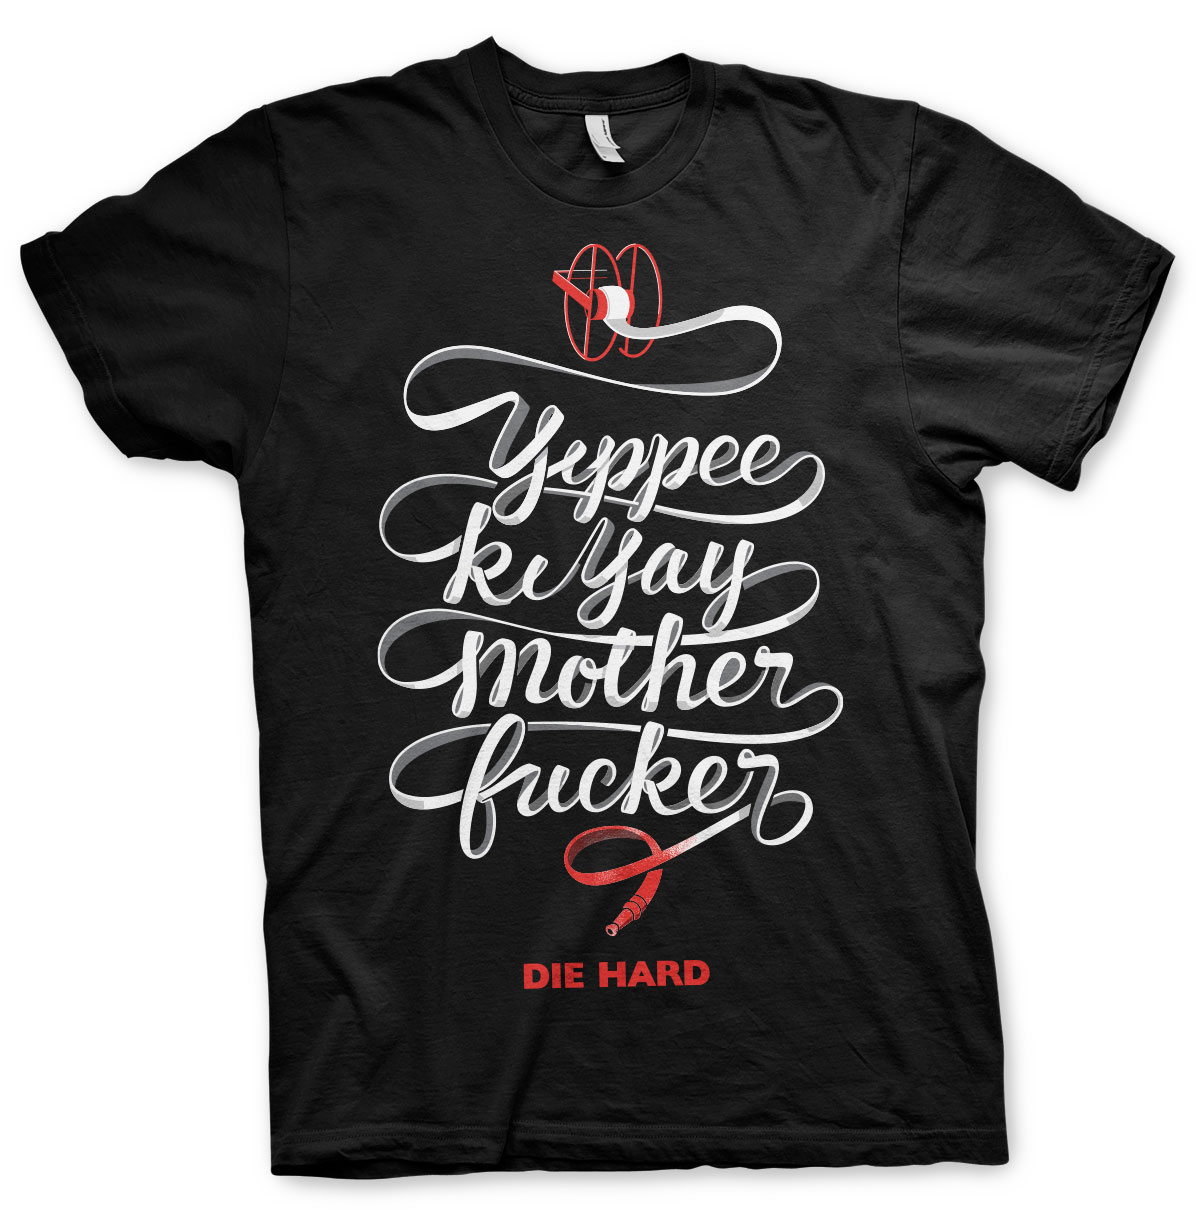 die-hard-yippee-ki-yay-motherfucker-t-shirt